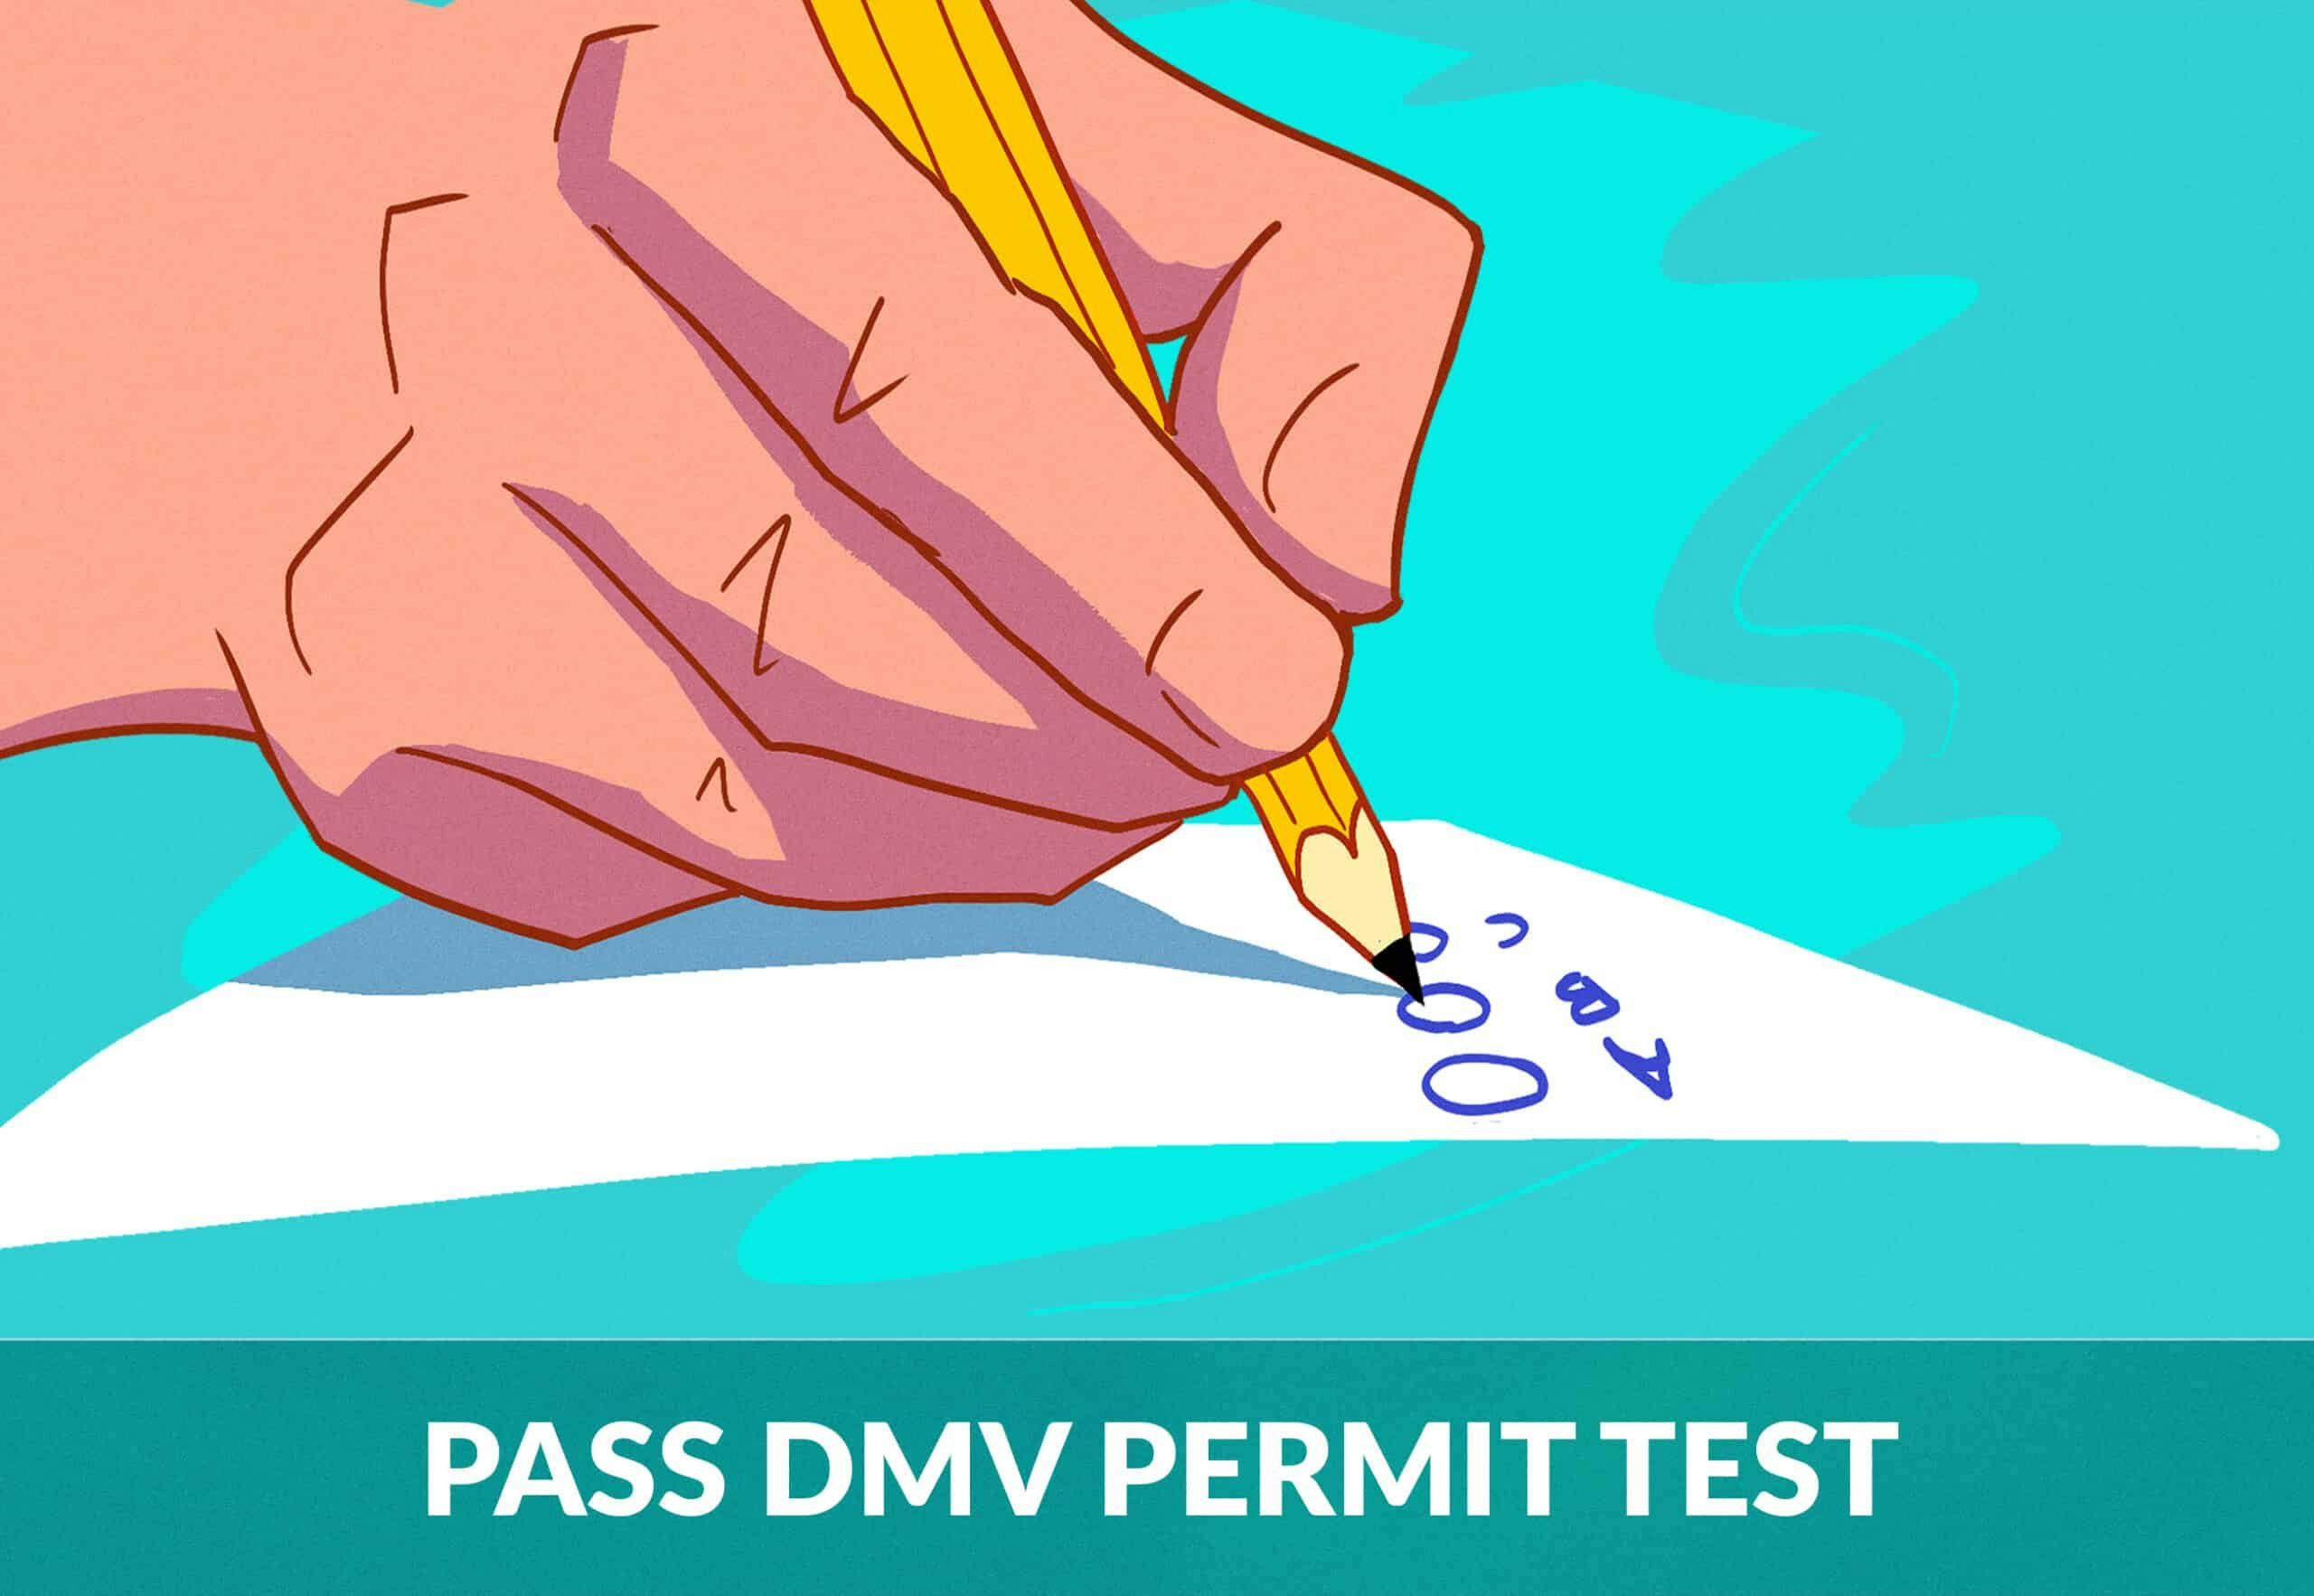 How to Pass DMV Permit Test